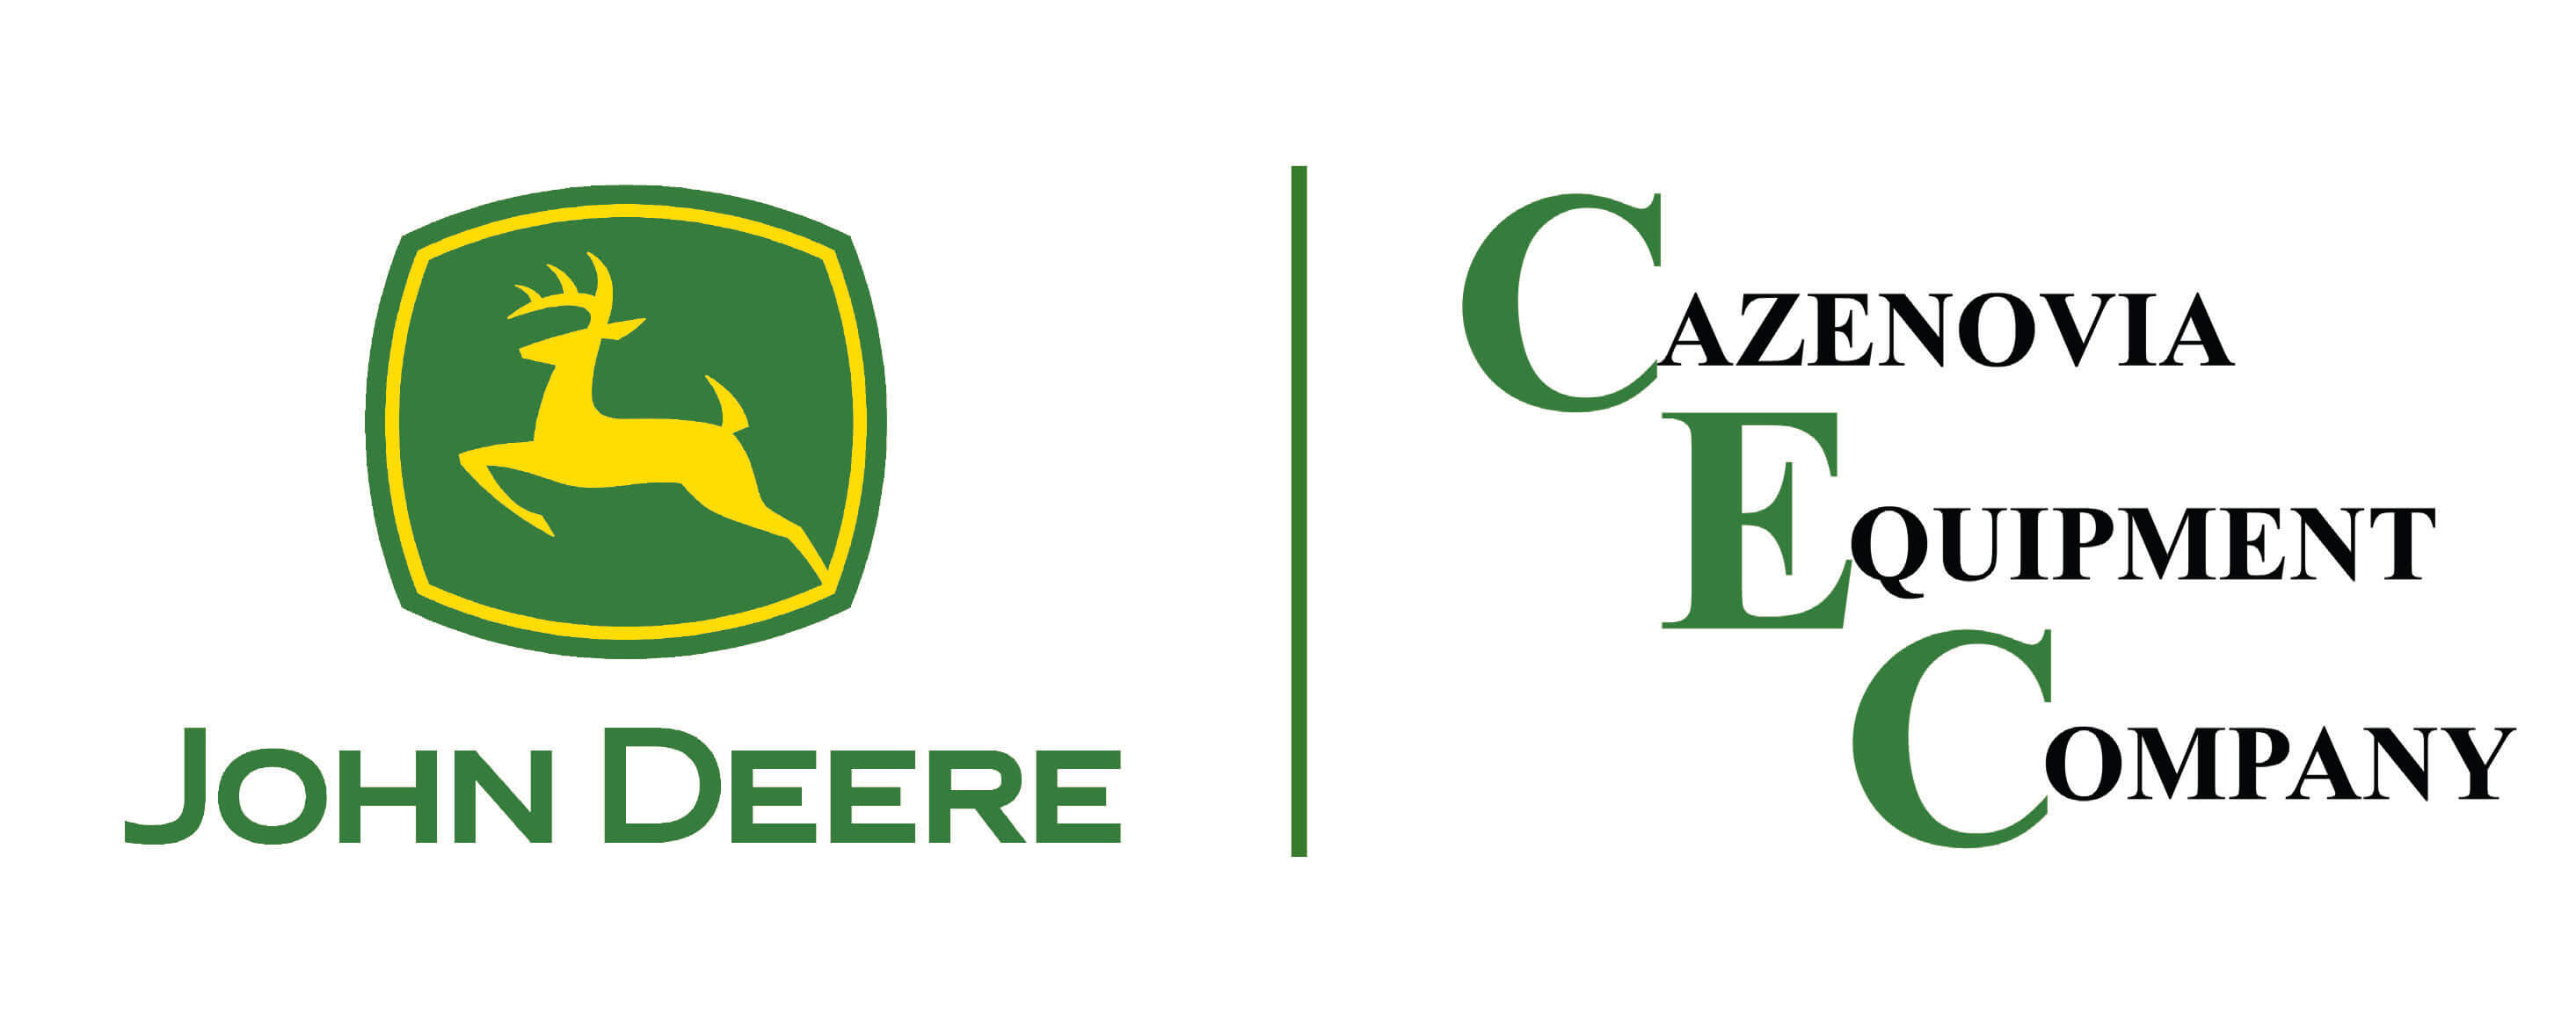 Cazenovia Equipment Company logo